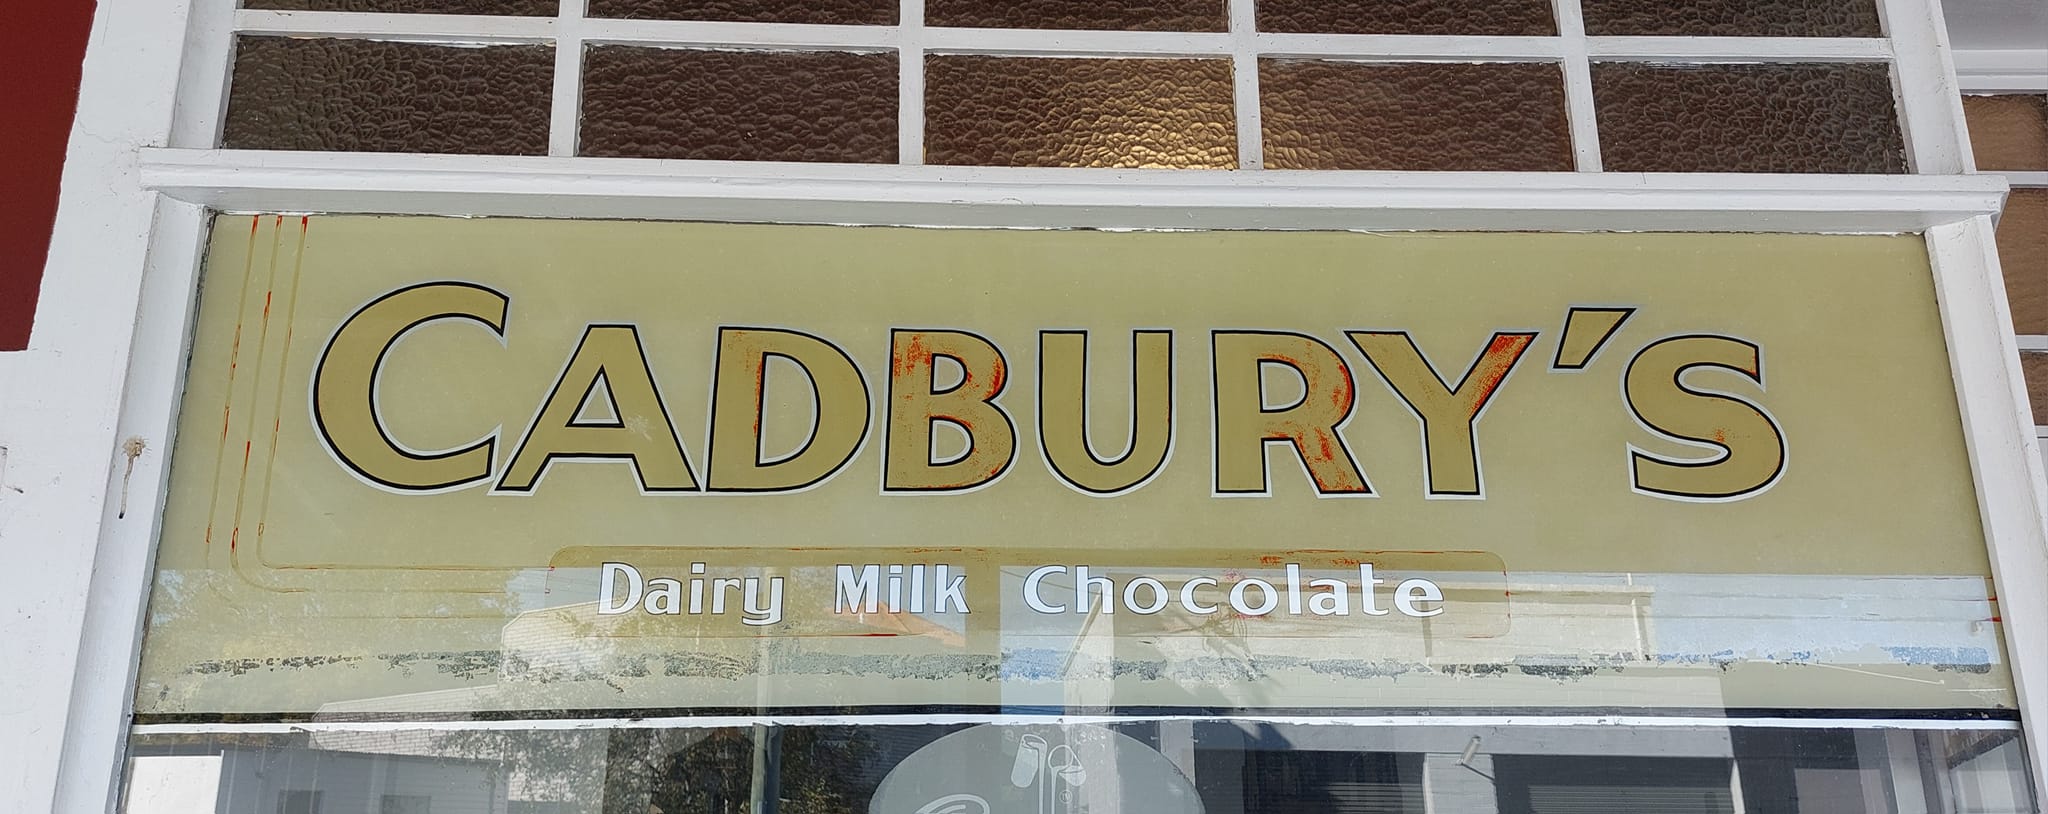 Cadbury chocolate.jpg